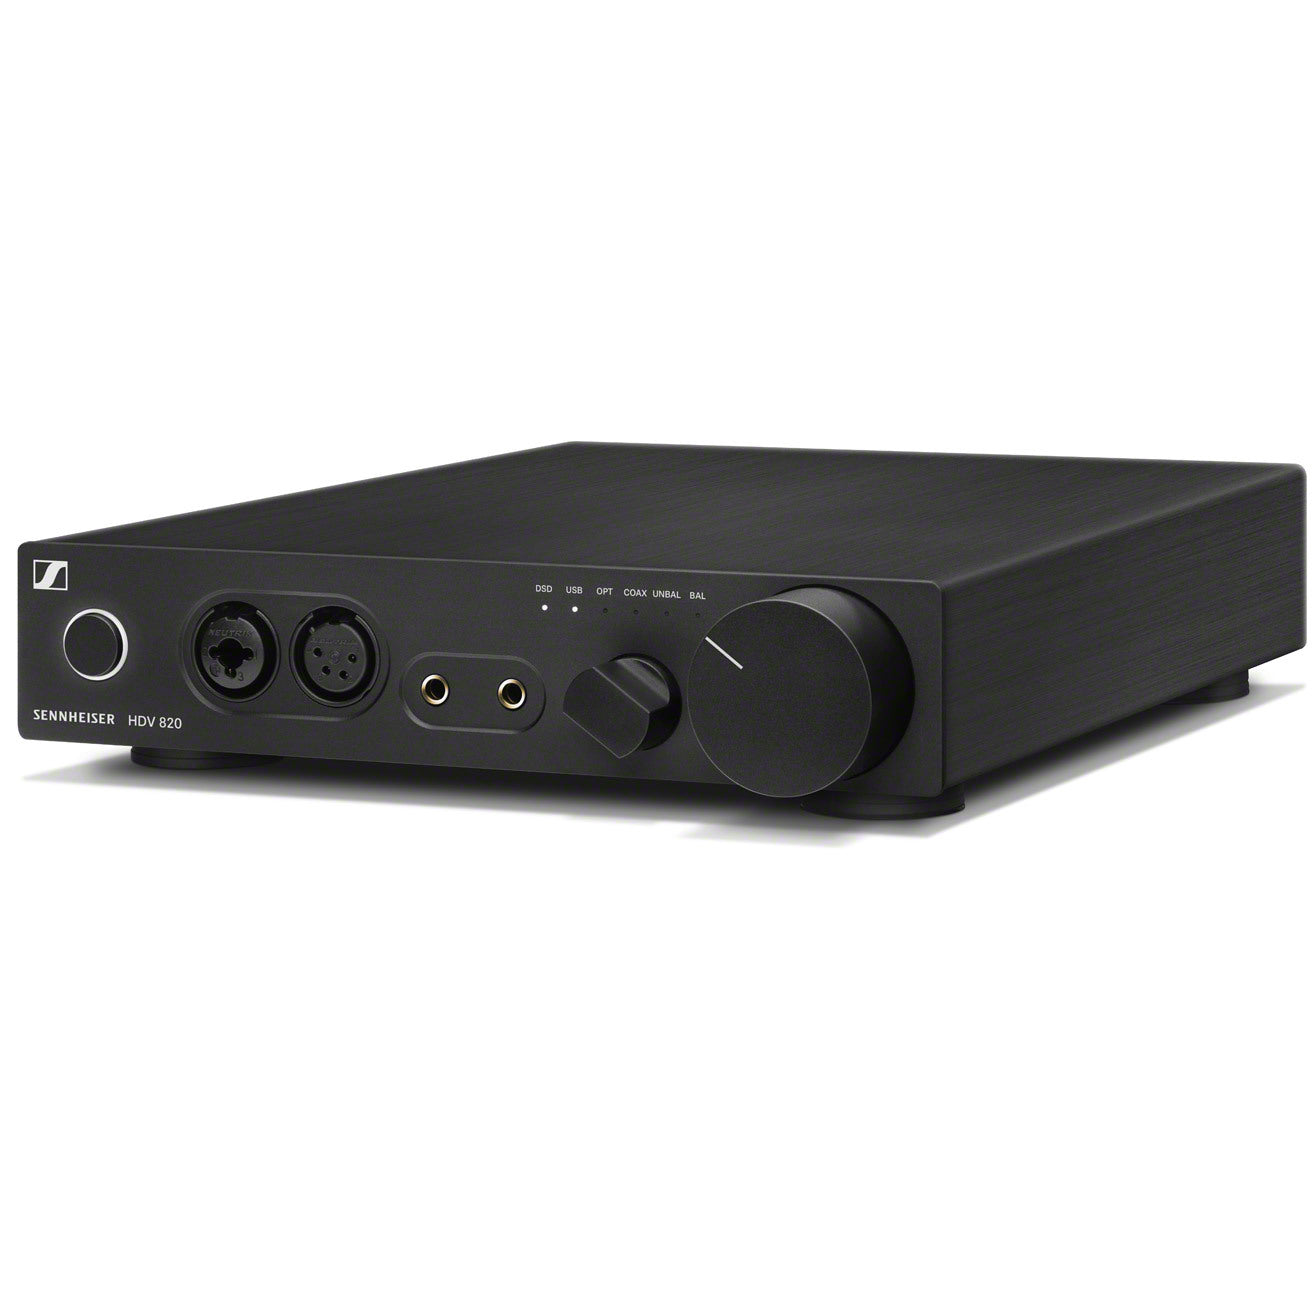 Sennheiser HDV 820 Digital Headphones Amplifier